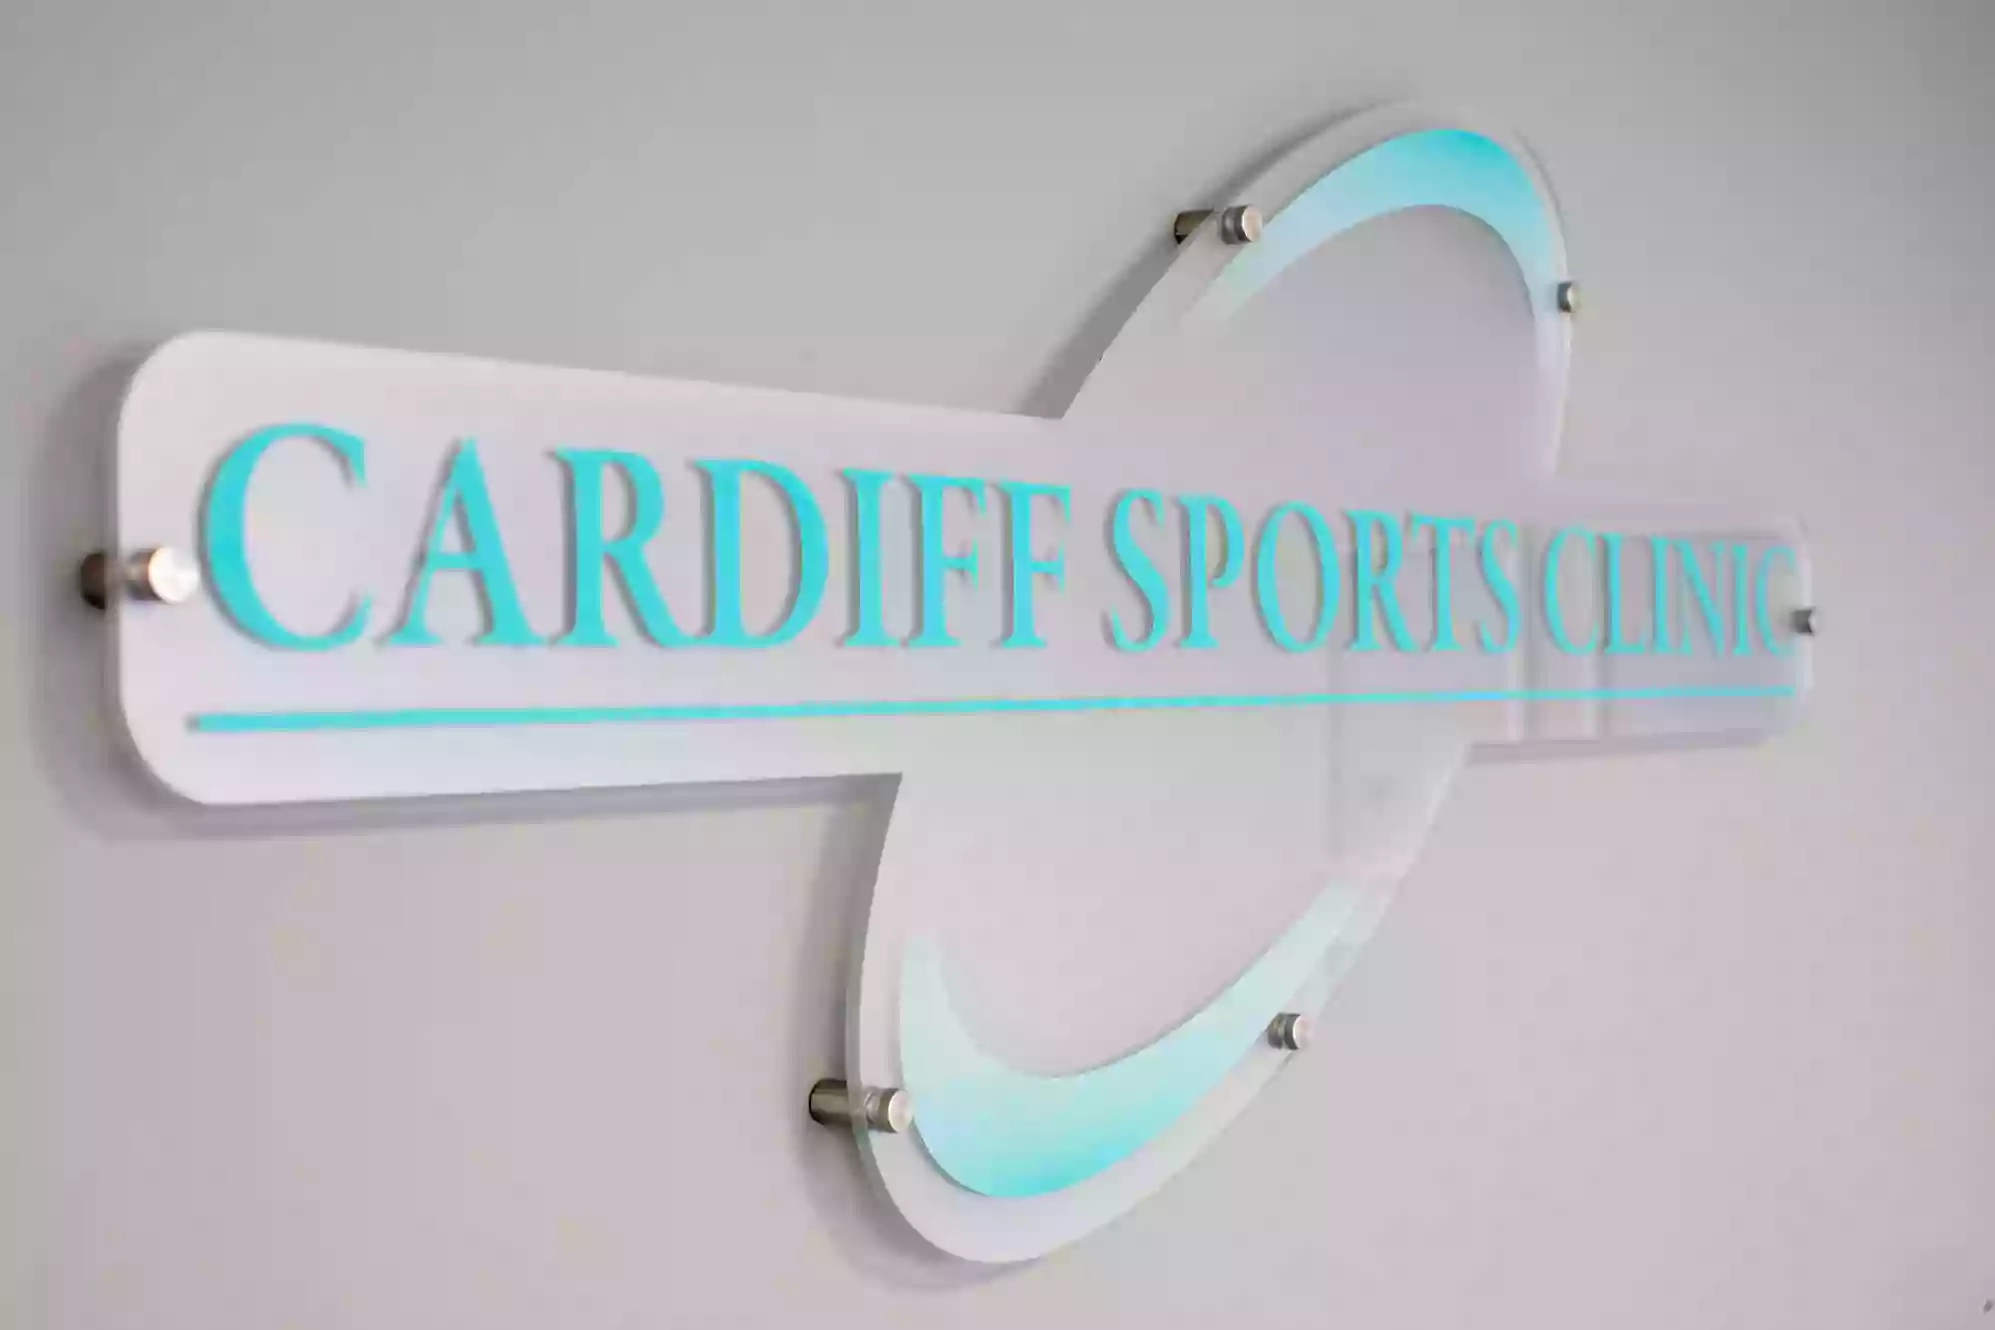 Cardiff Sports Clinic